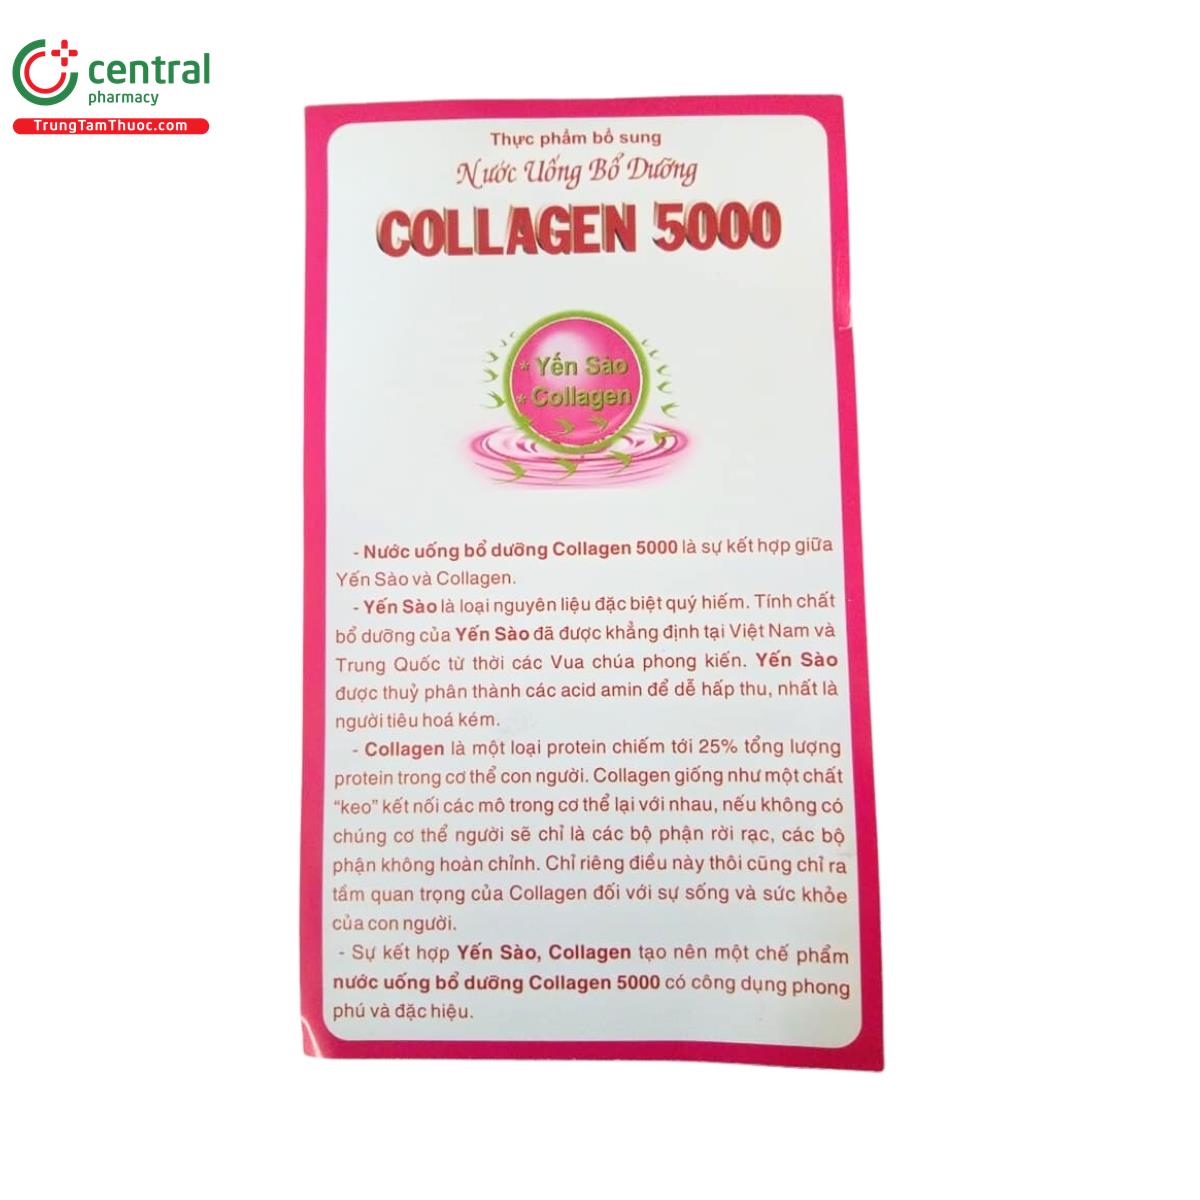 collagen 5000 khapharco co duong 3 E1308